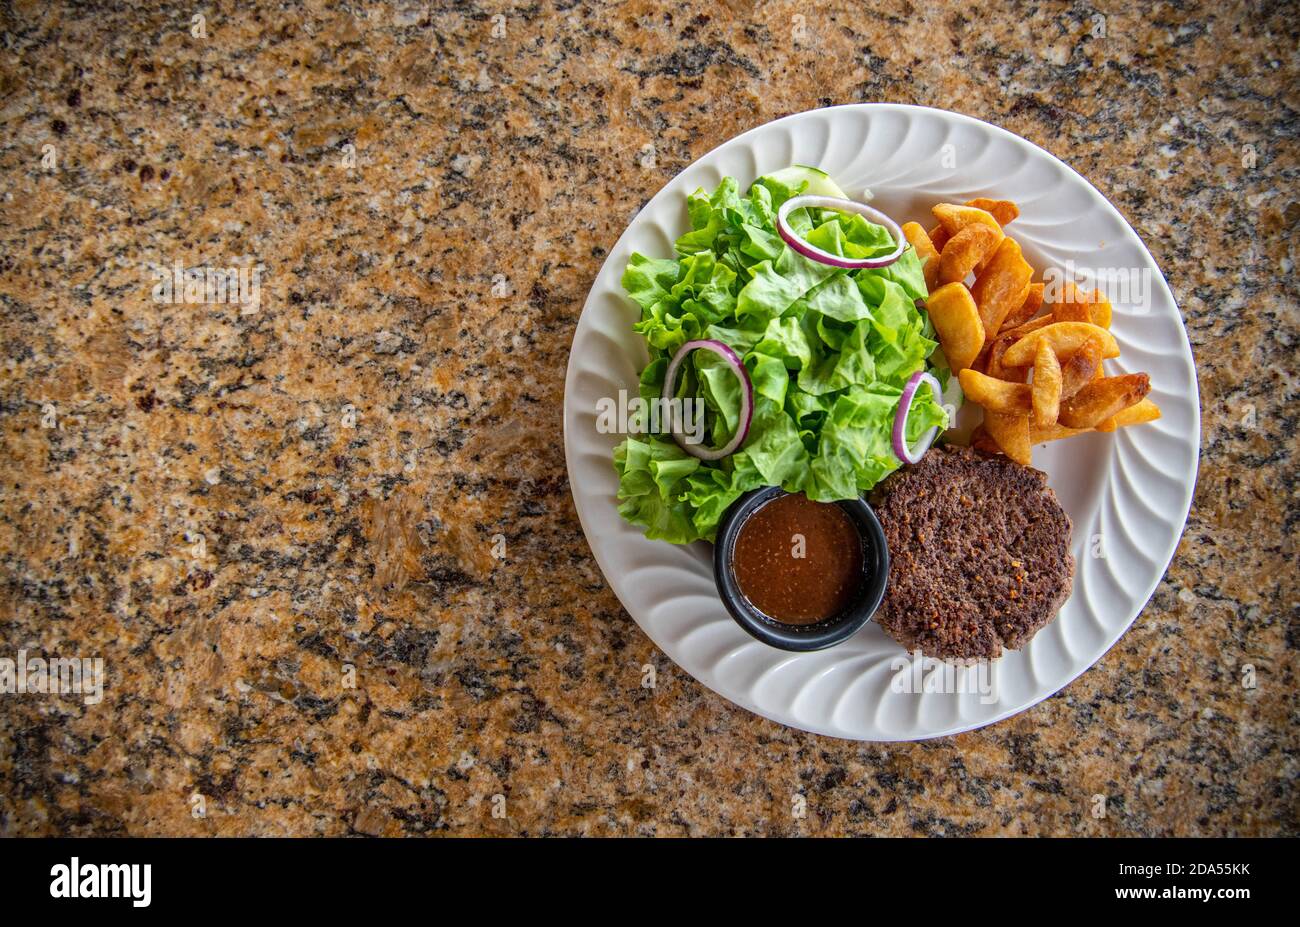 Hamburger patty with green salad and steak fries Stock Photo